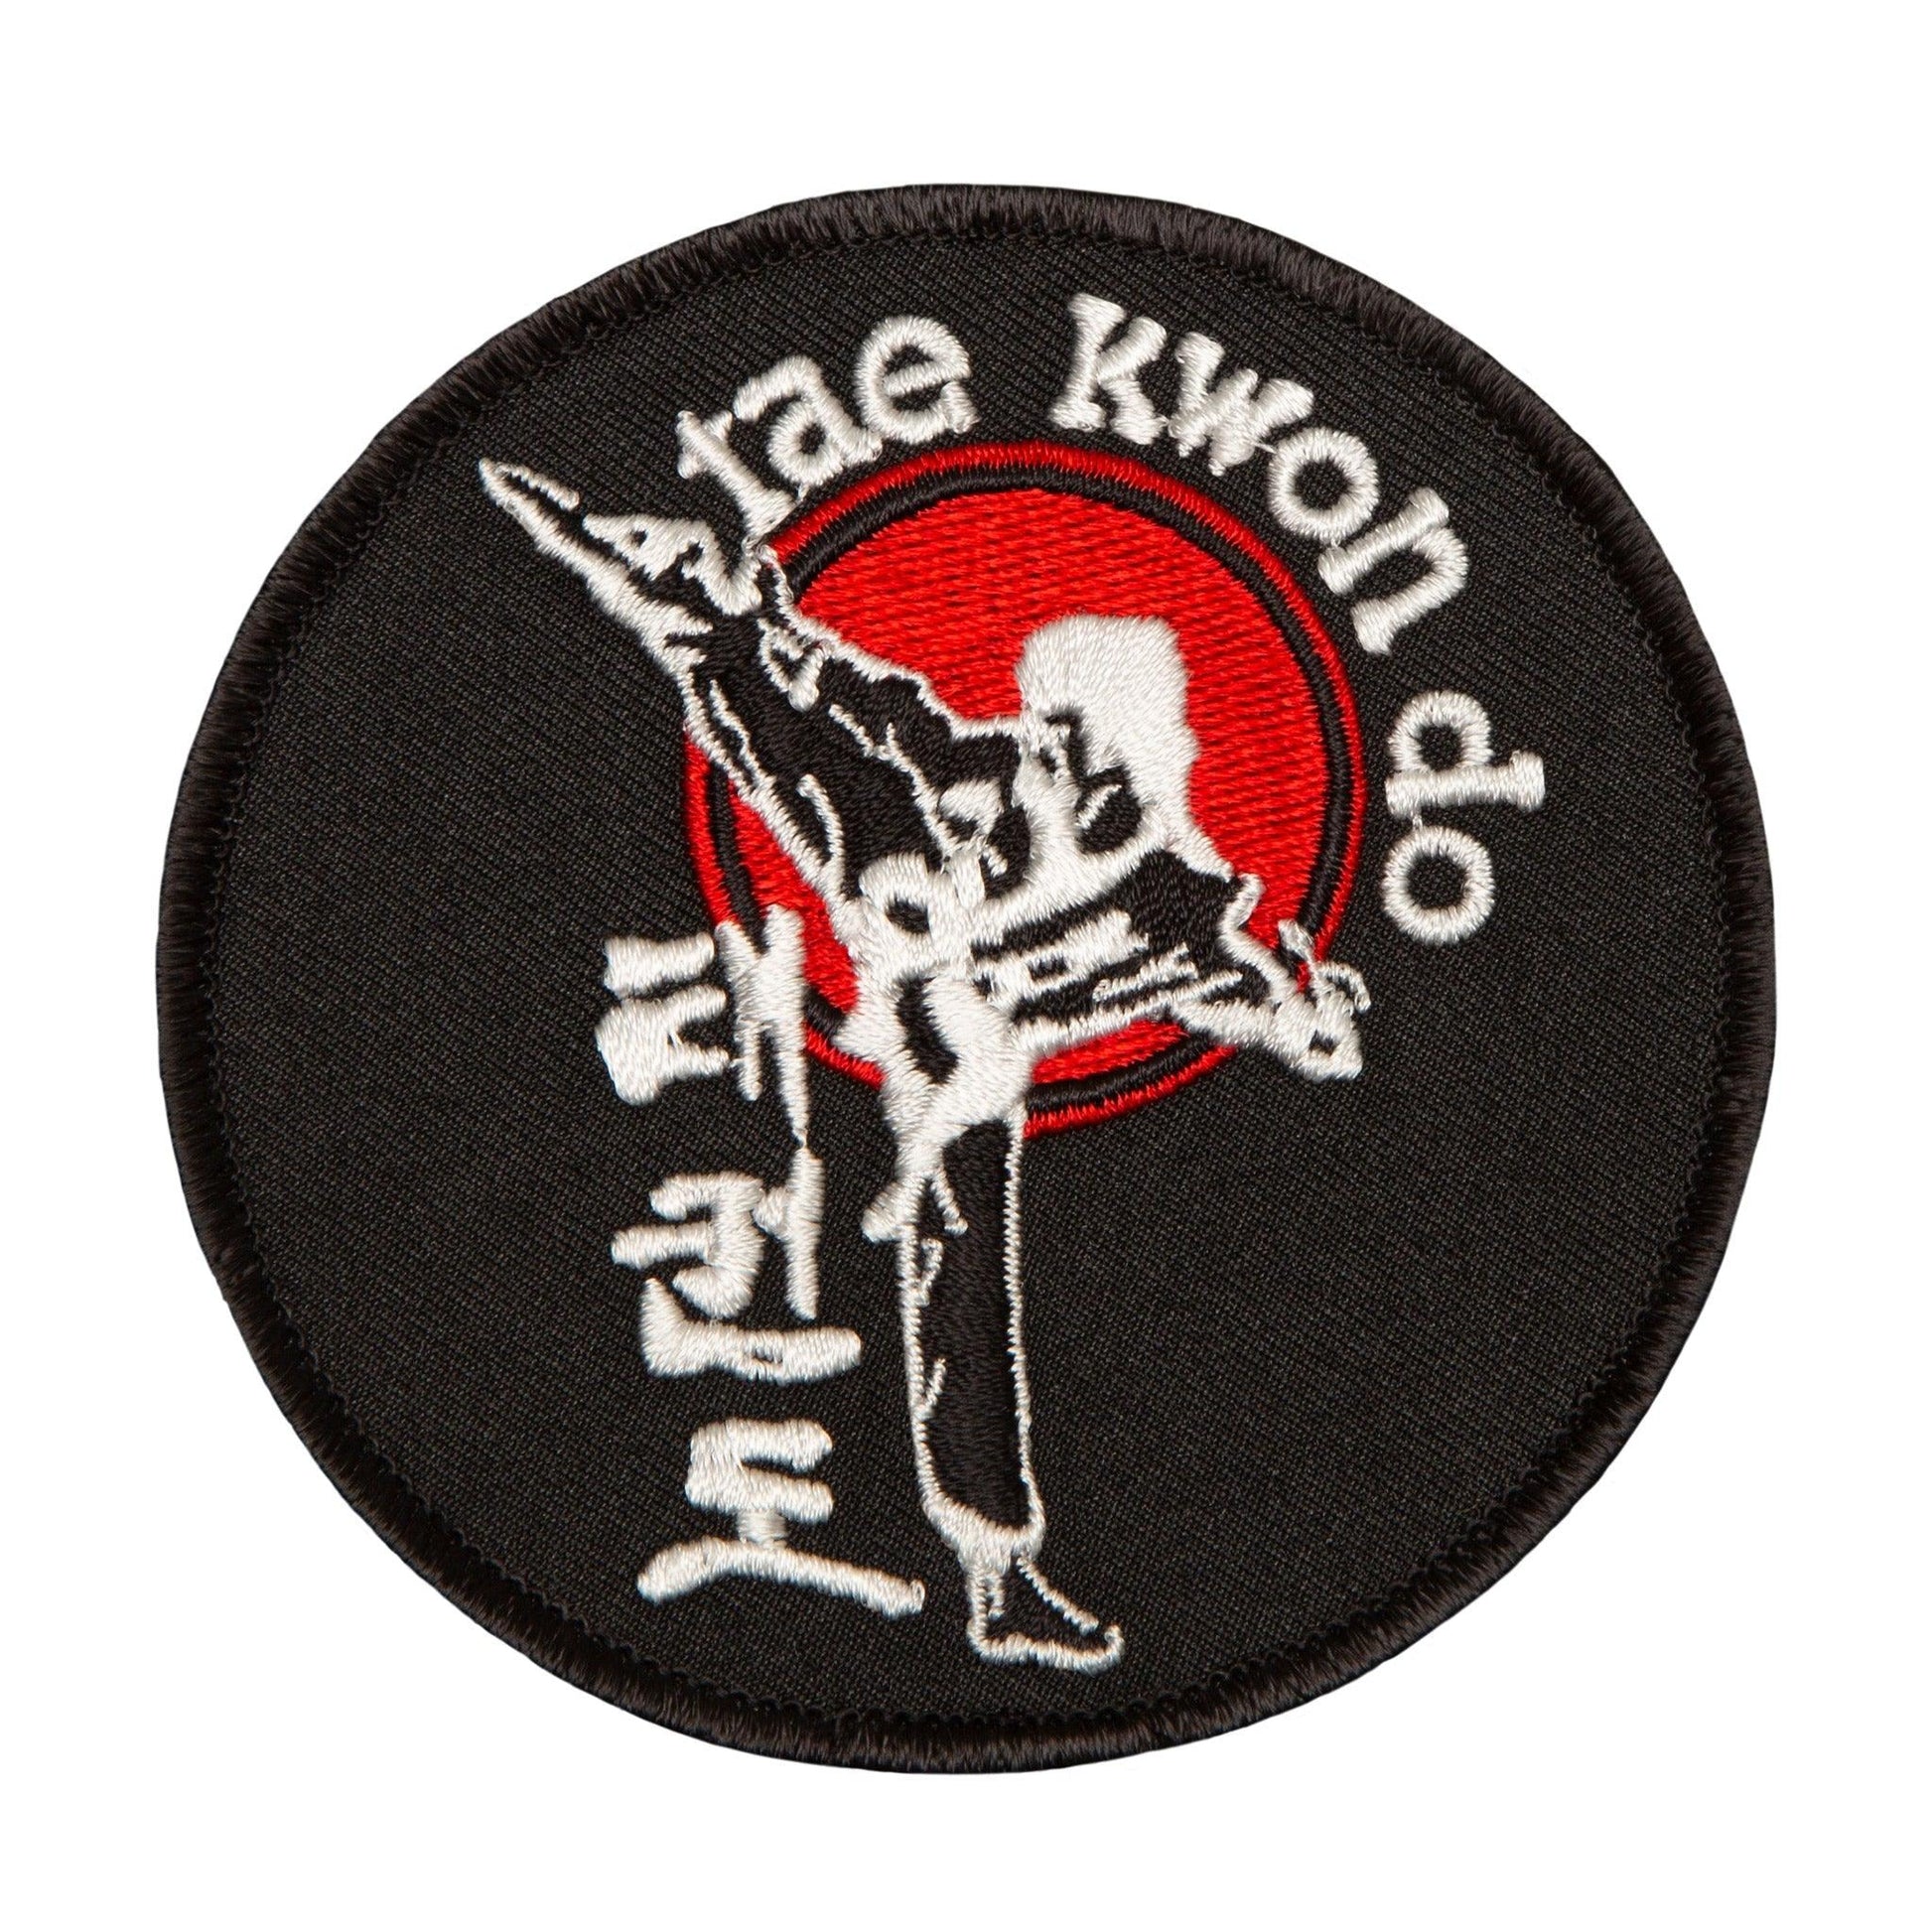 Tae Kwon Do Sidekick Patch - Violent Art Shop